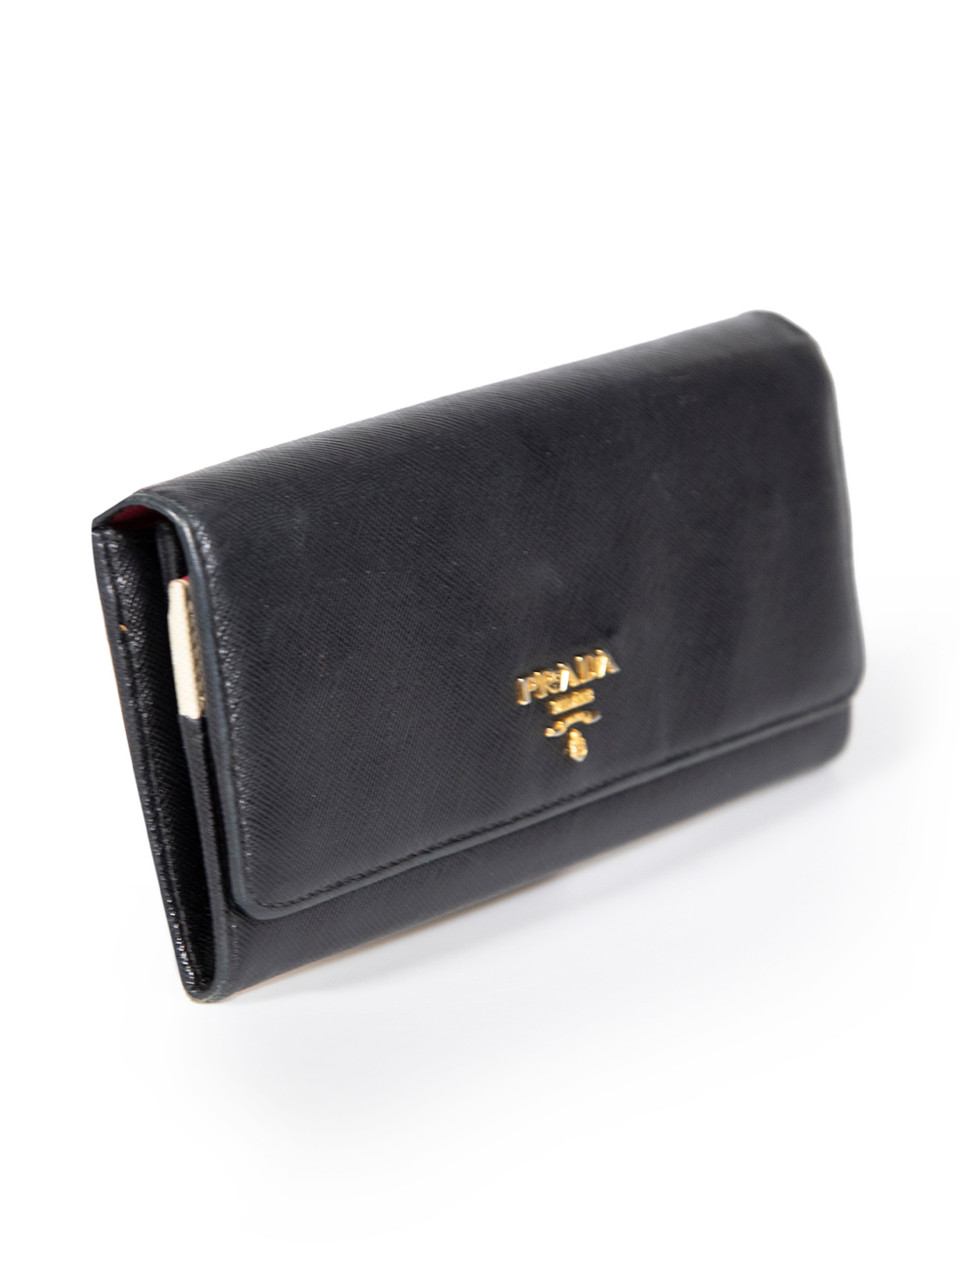 Prada Black Saffiano Leather Large Flap Continental Wallet